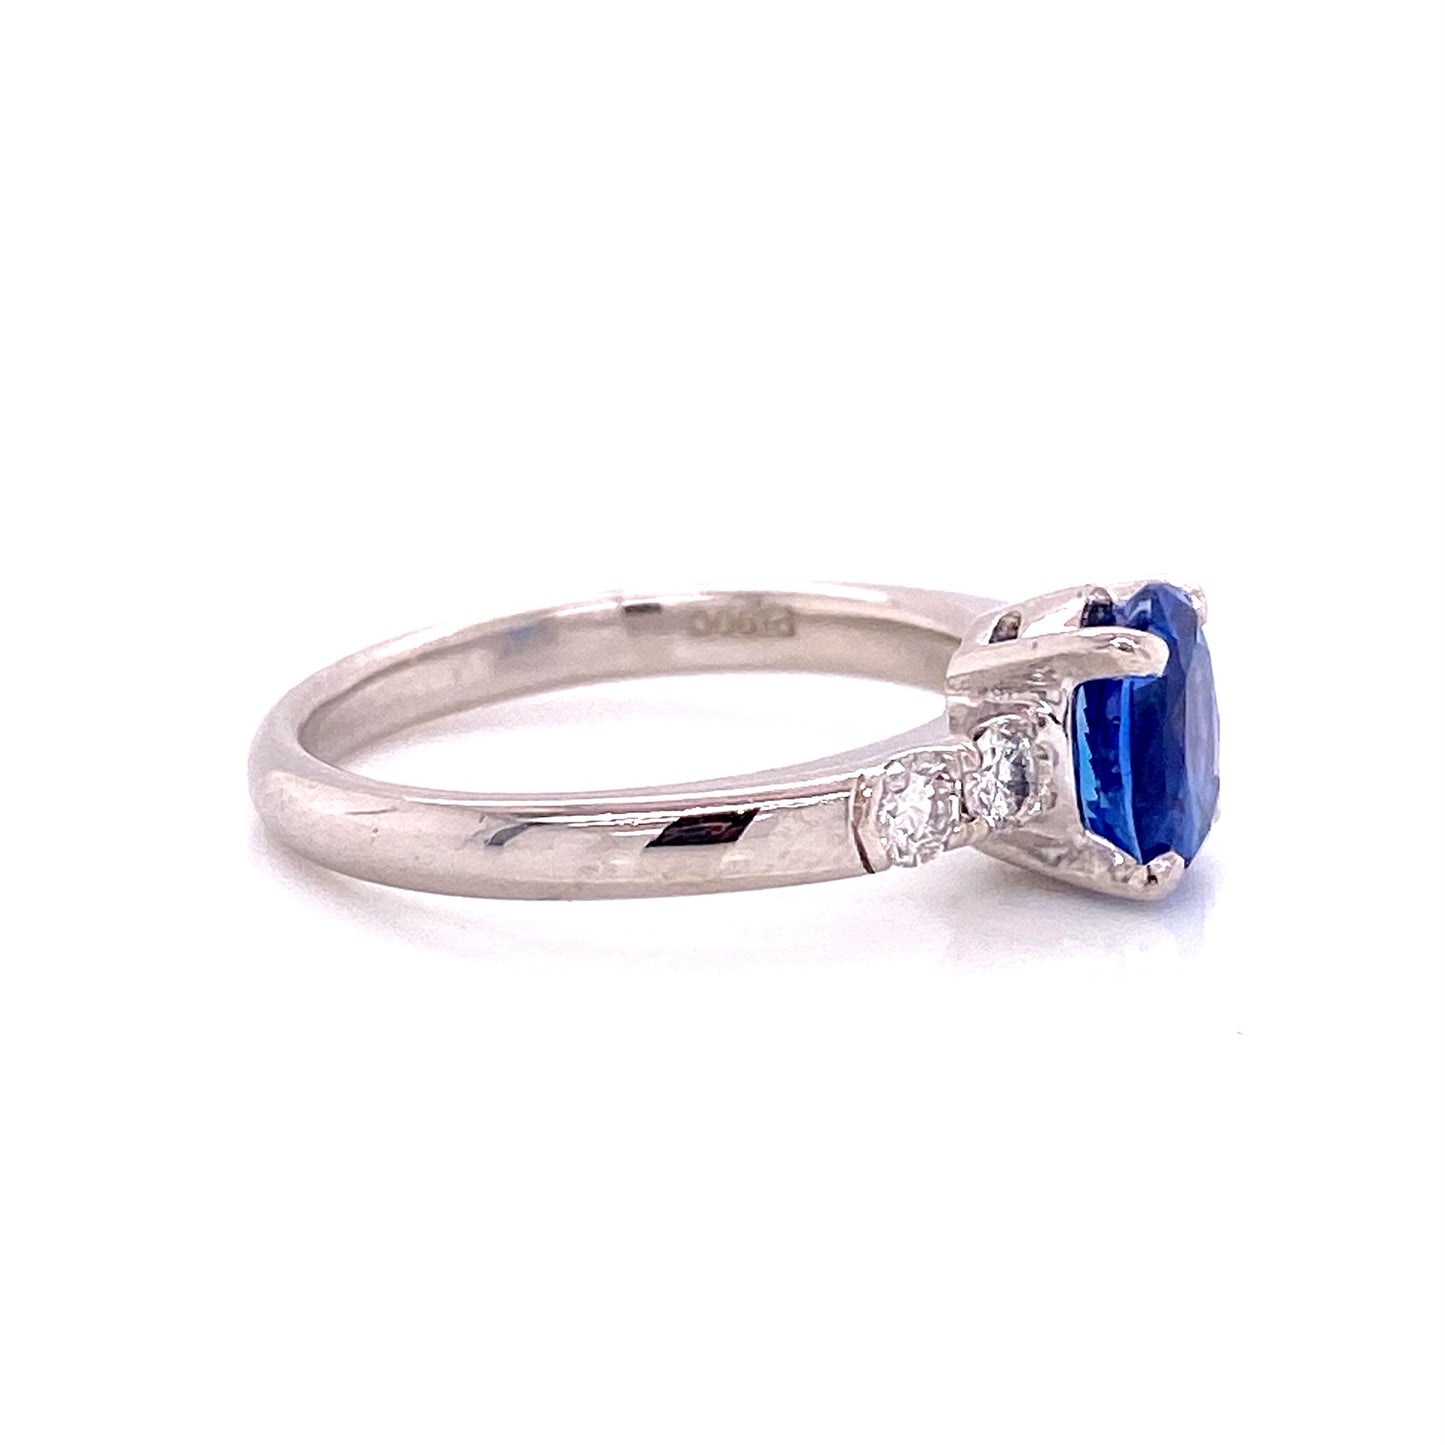 Custom Jewelry, ring, platinum, sapphire, engagement ring, white diamonds, Llyn strong, Greenville, South Carolina